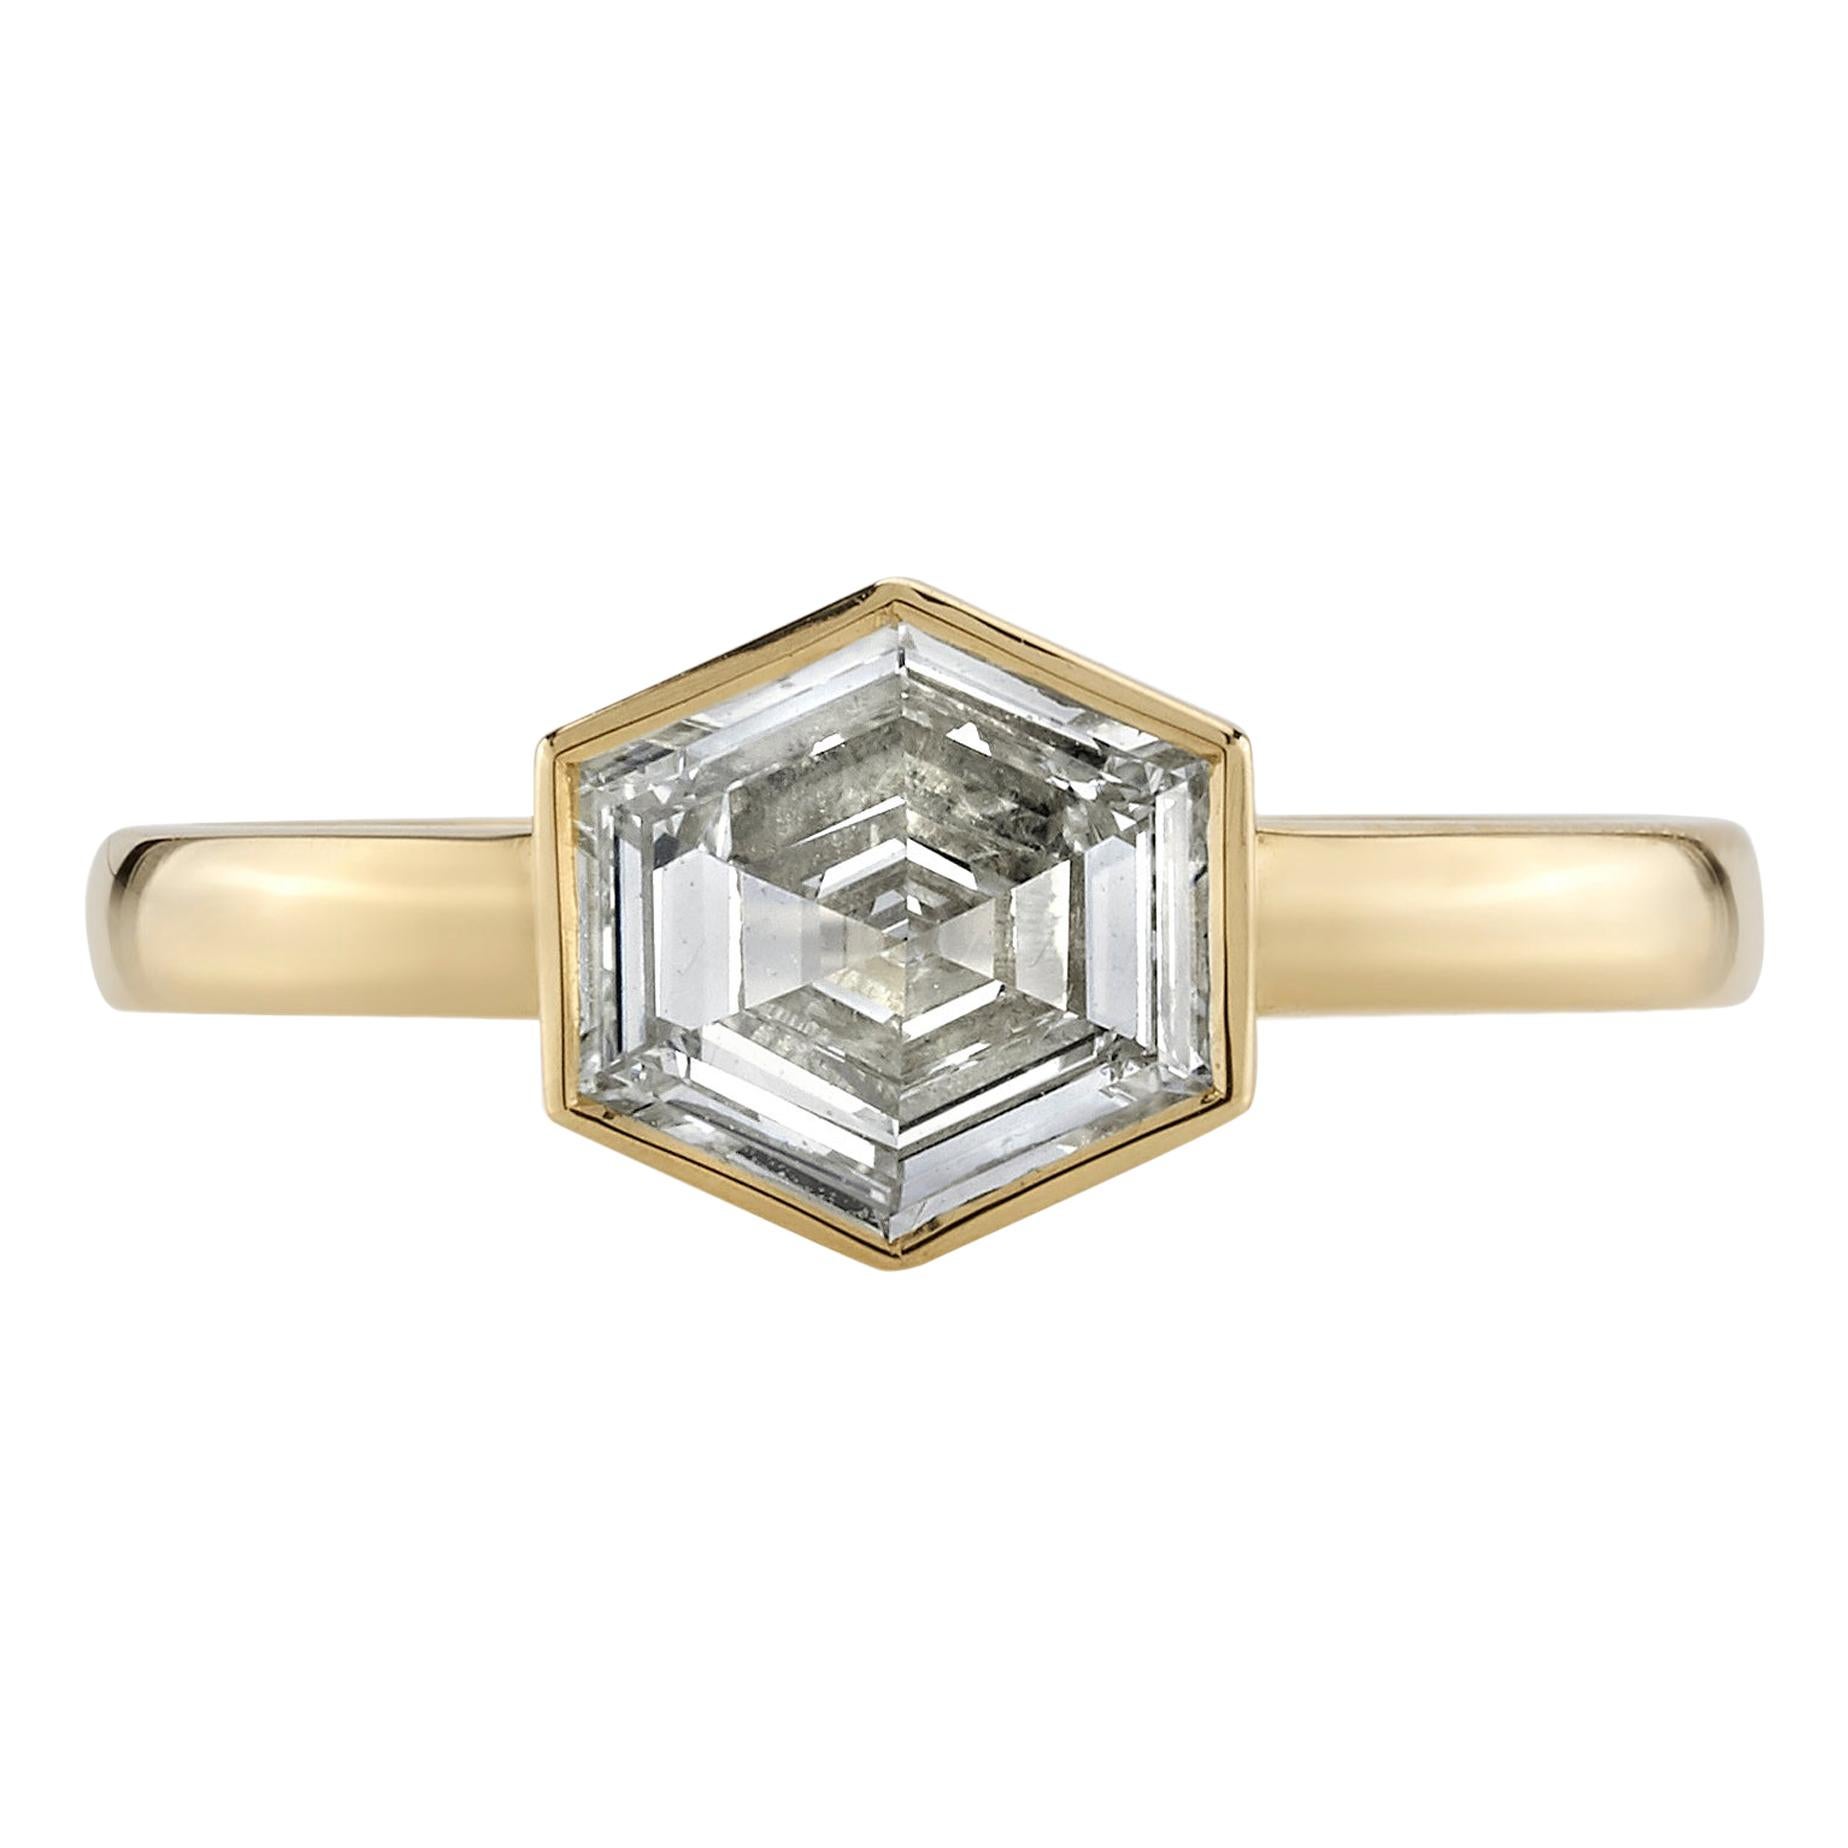 0.89 Carat Step Cut Diamond Set in a Handcrafted 18 Karat Yellow Gold Ring